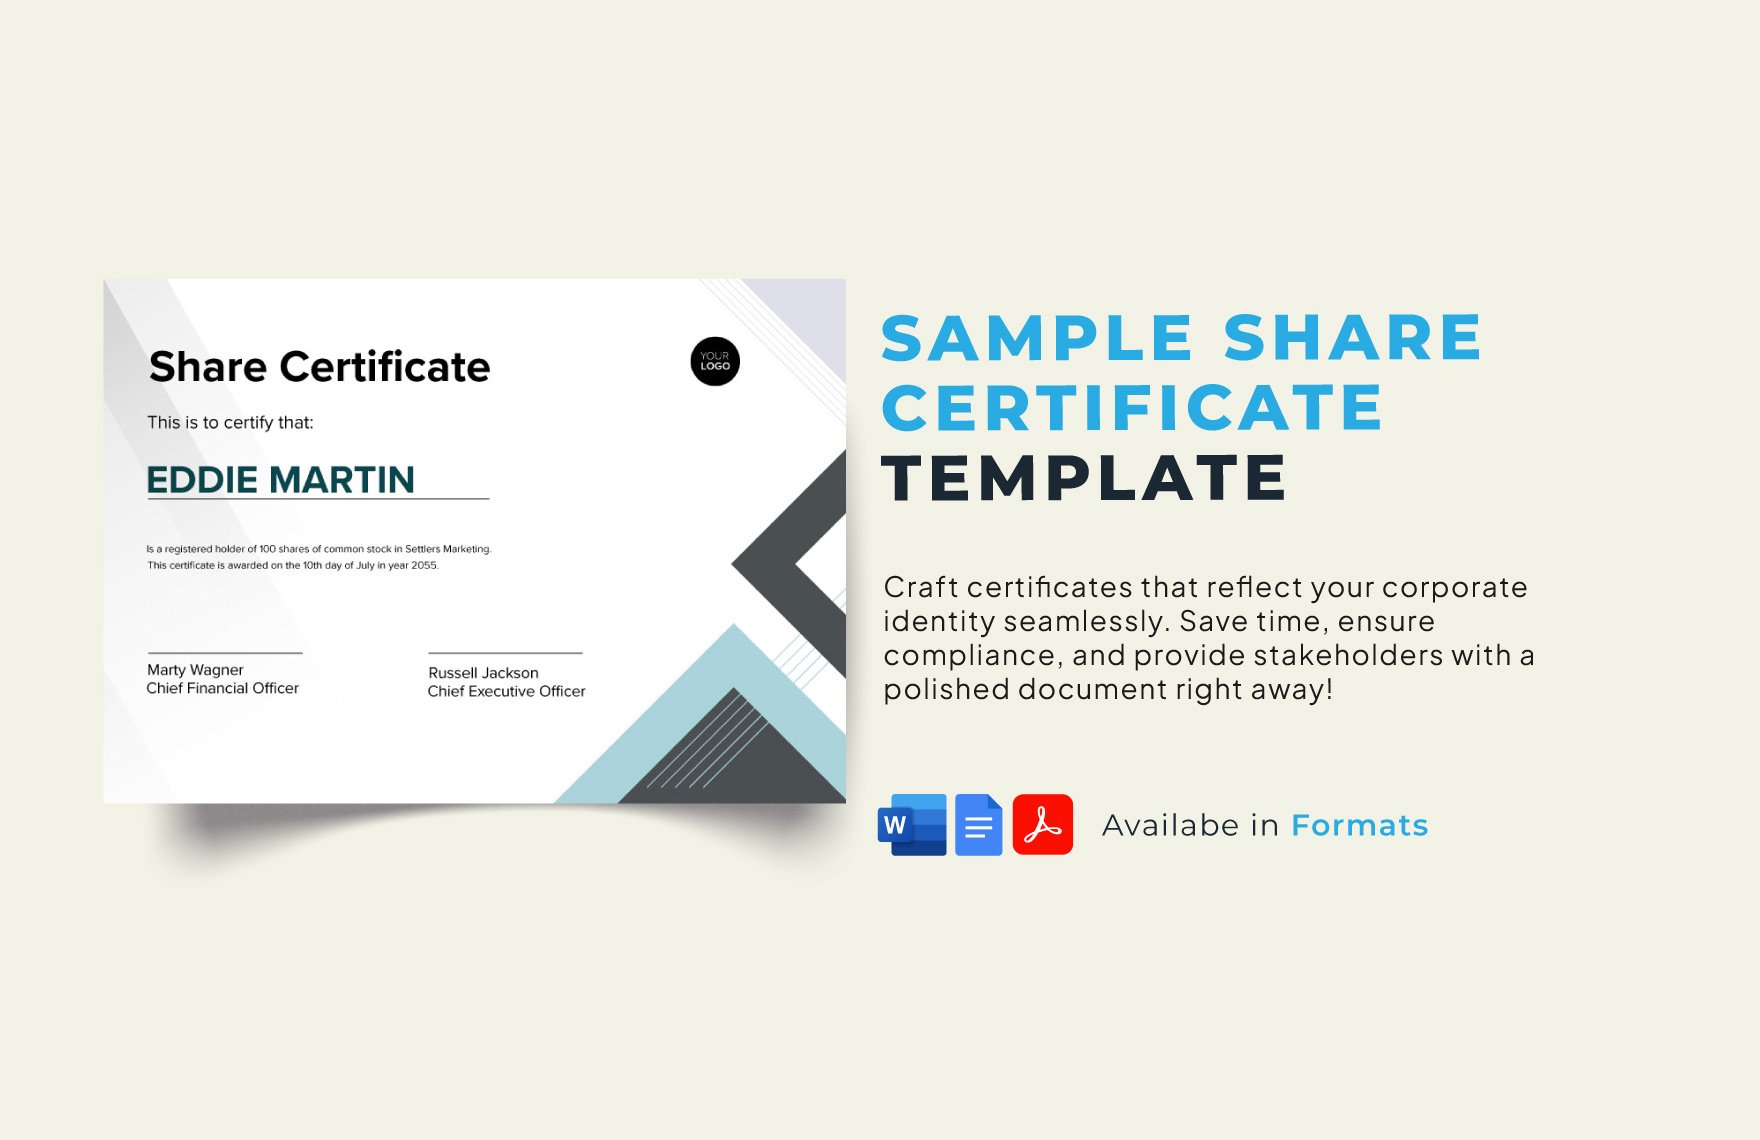 Sample Share Certificate Template